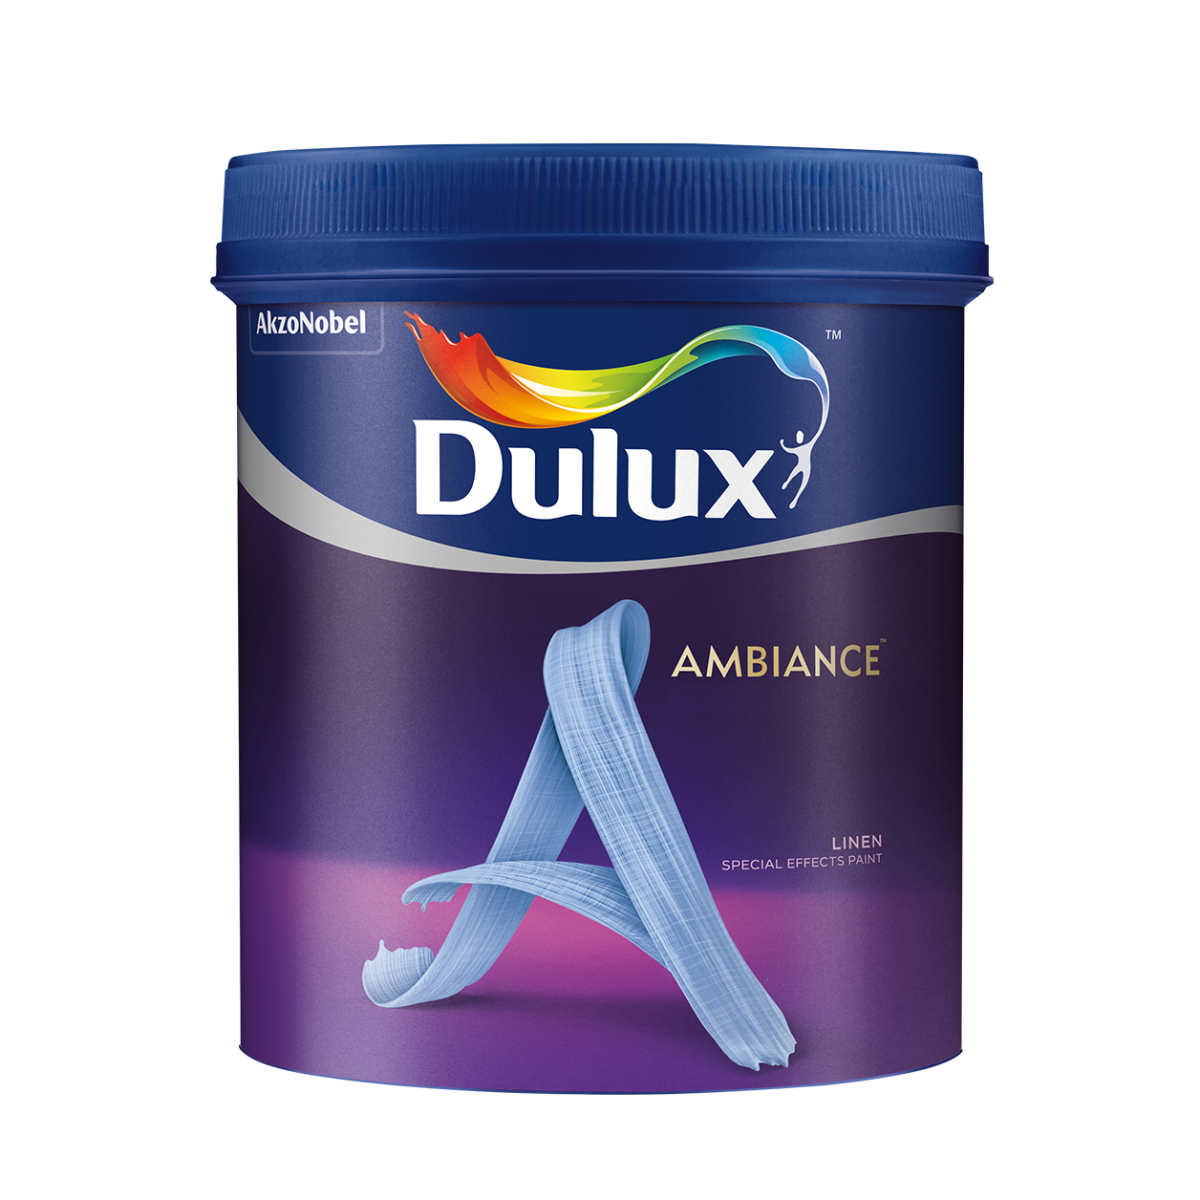 Dulux Ambiance Special Effects Paints (Linen)